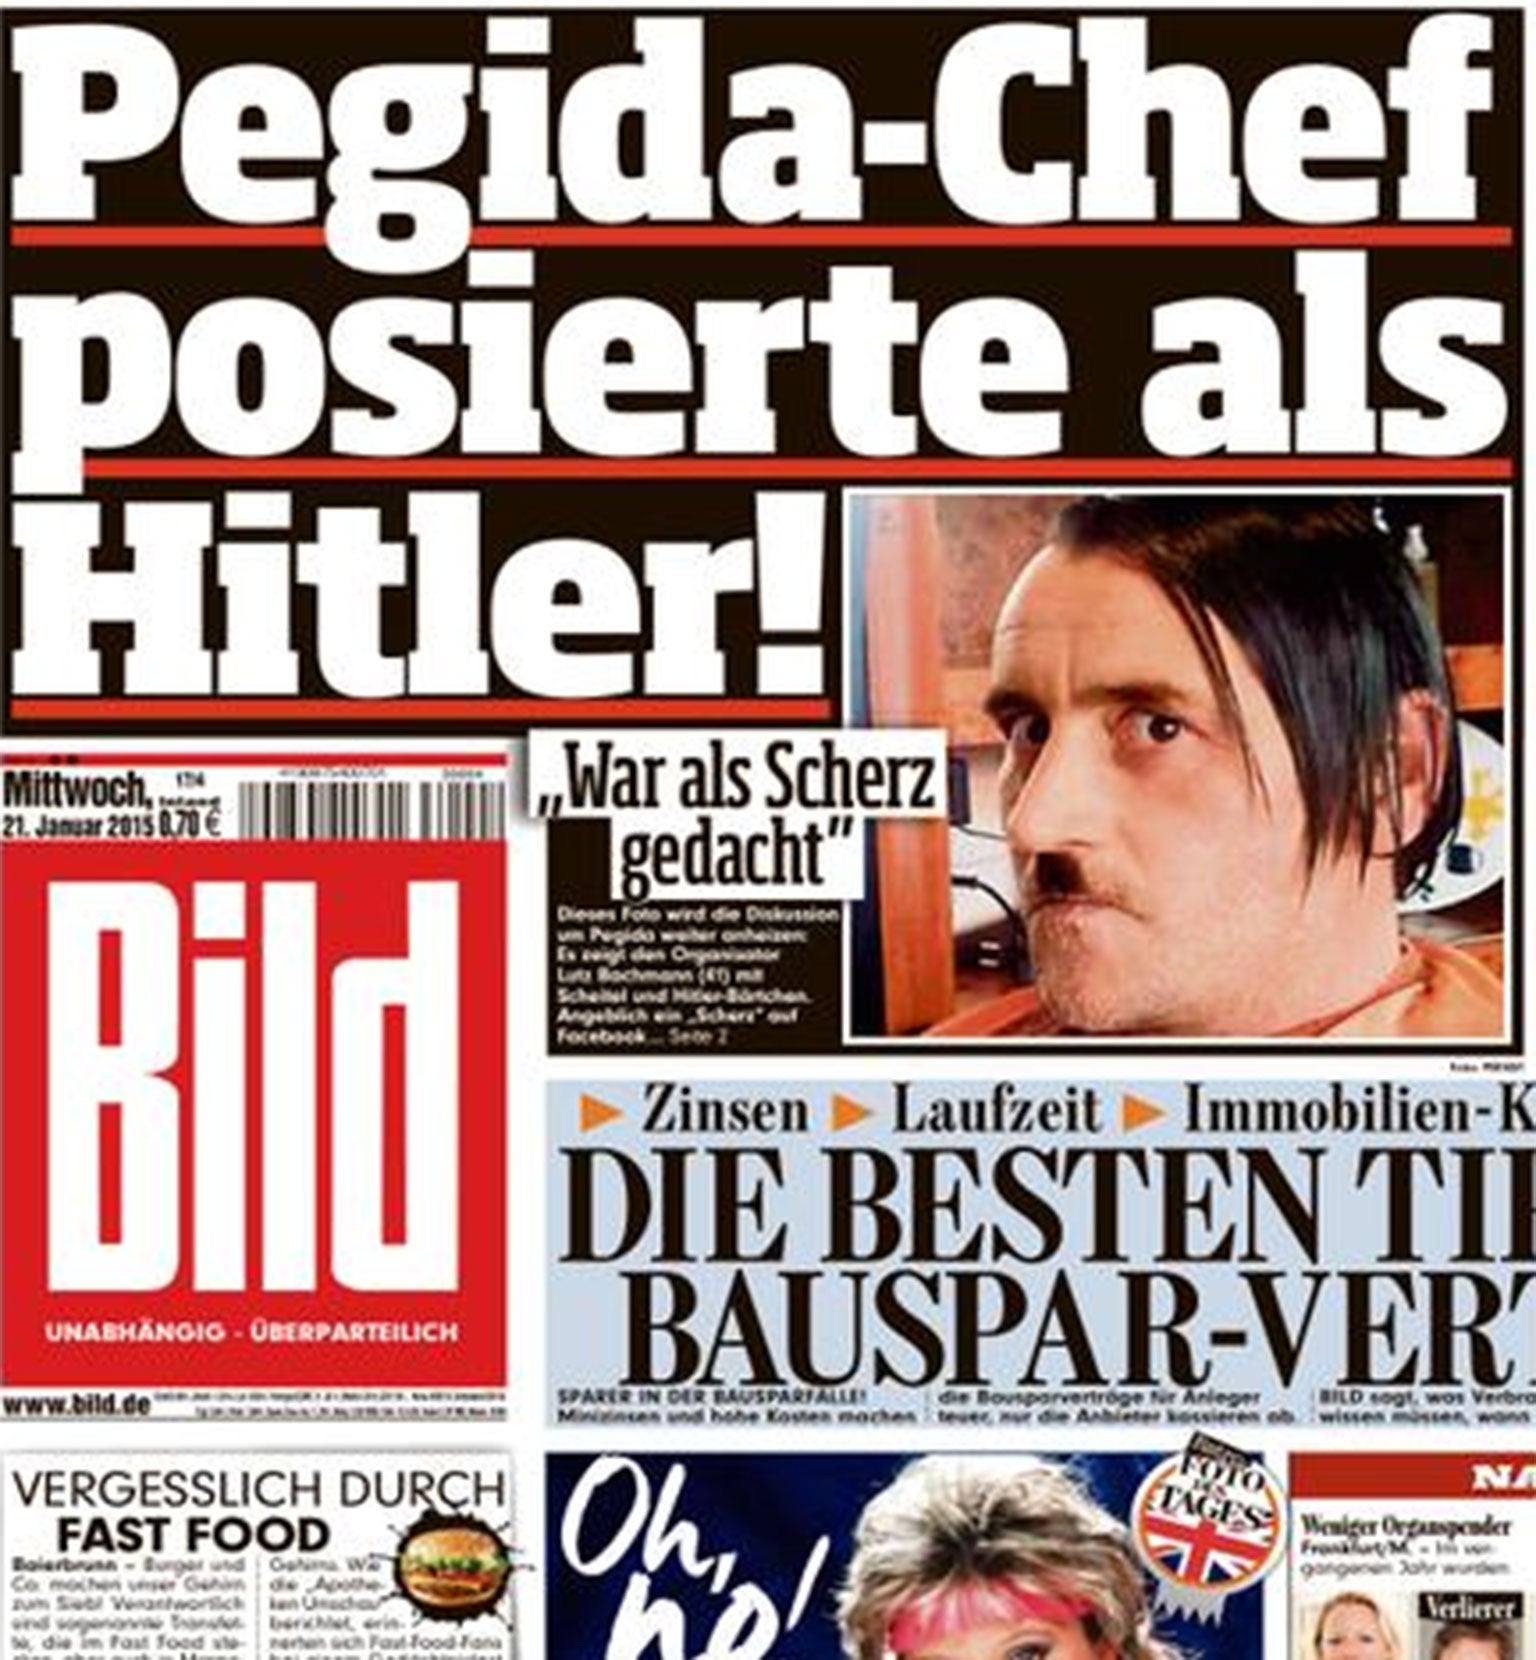 Bild's front page showing Pegida leader Lutz Bachmann 'posing as Hitler'